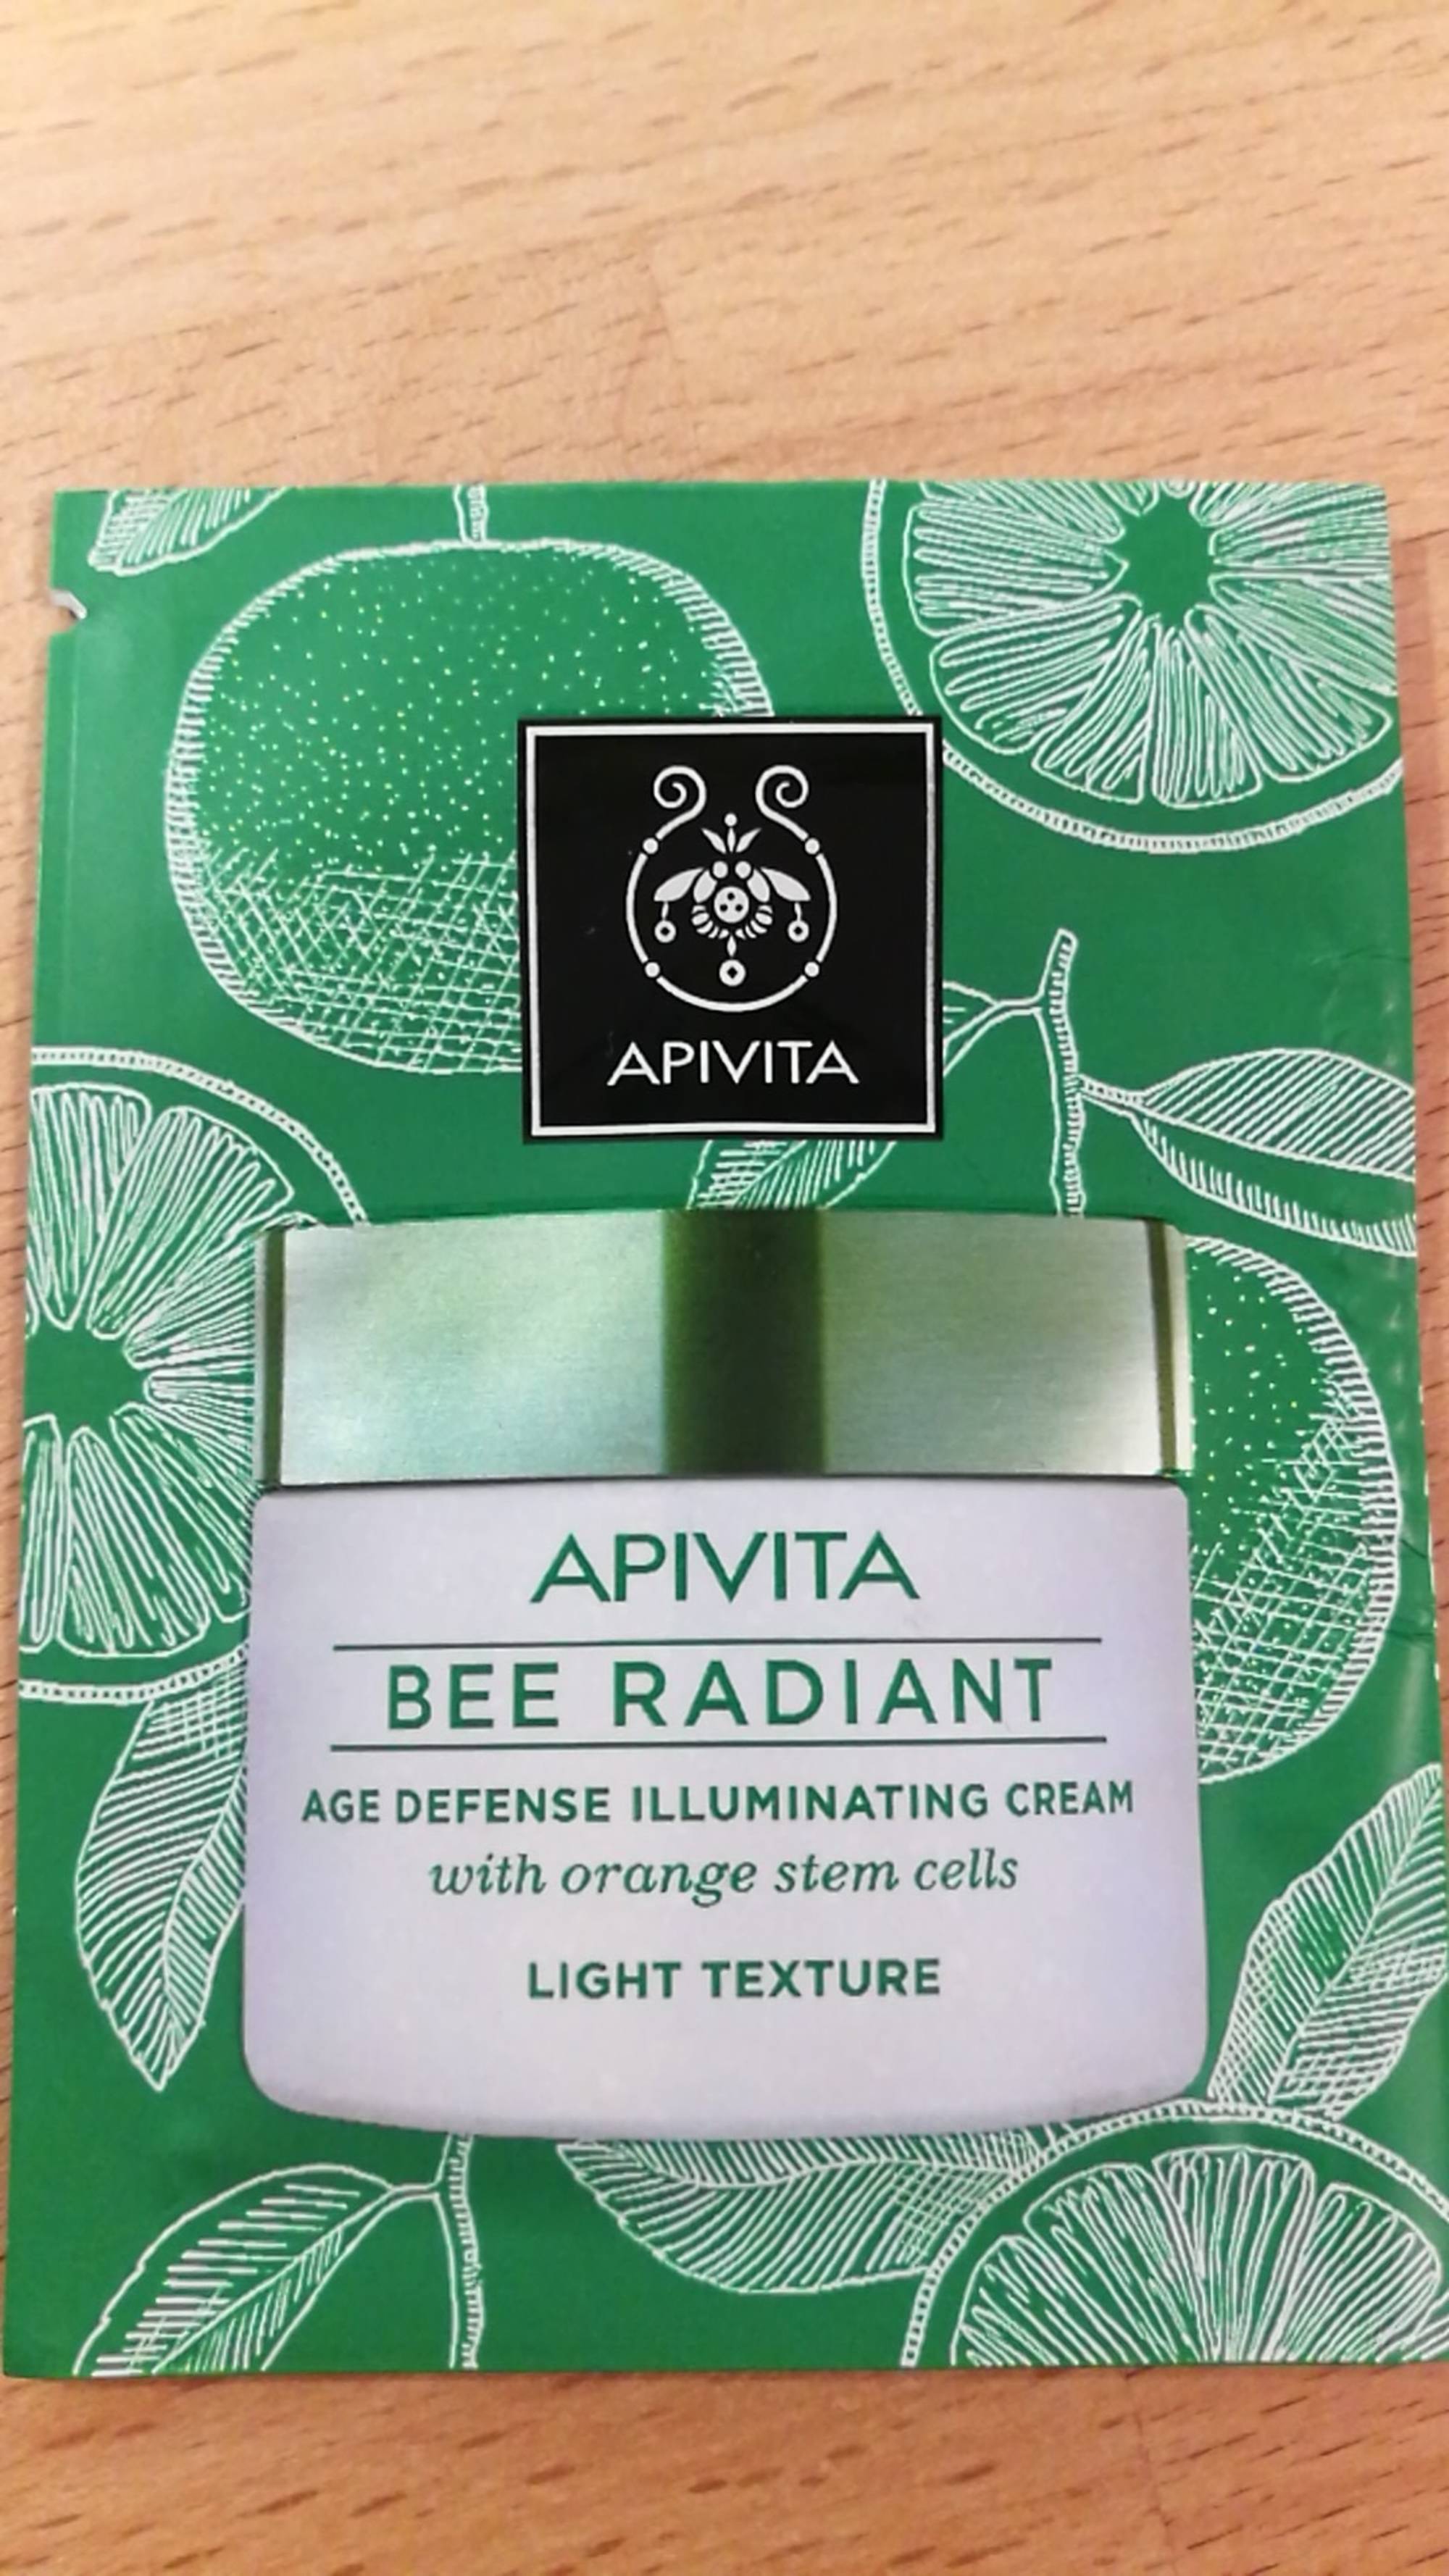 APIVITA - Bee radiant - Age defense illuminating cream